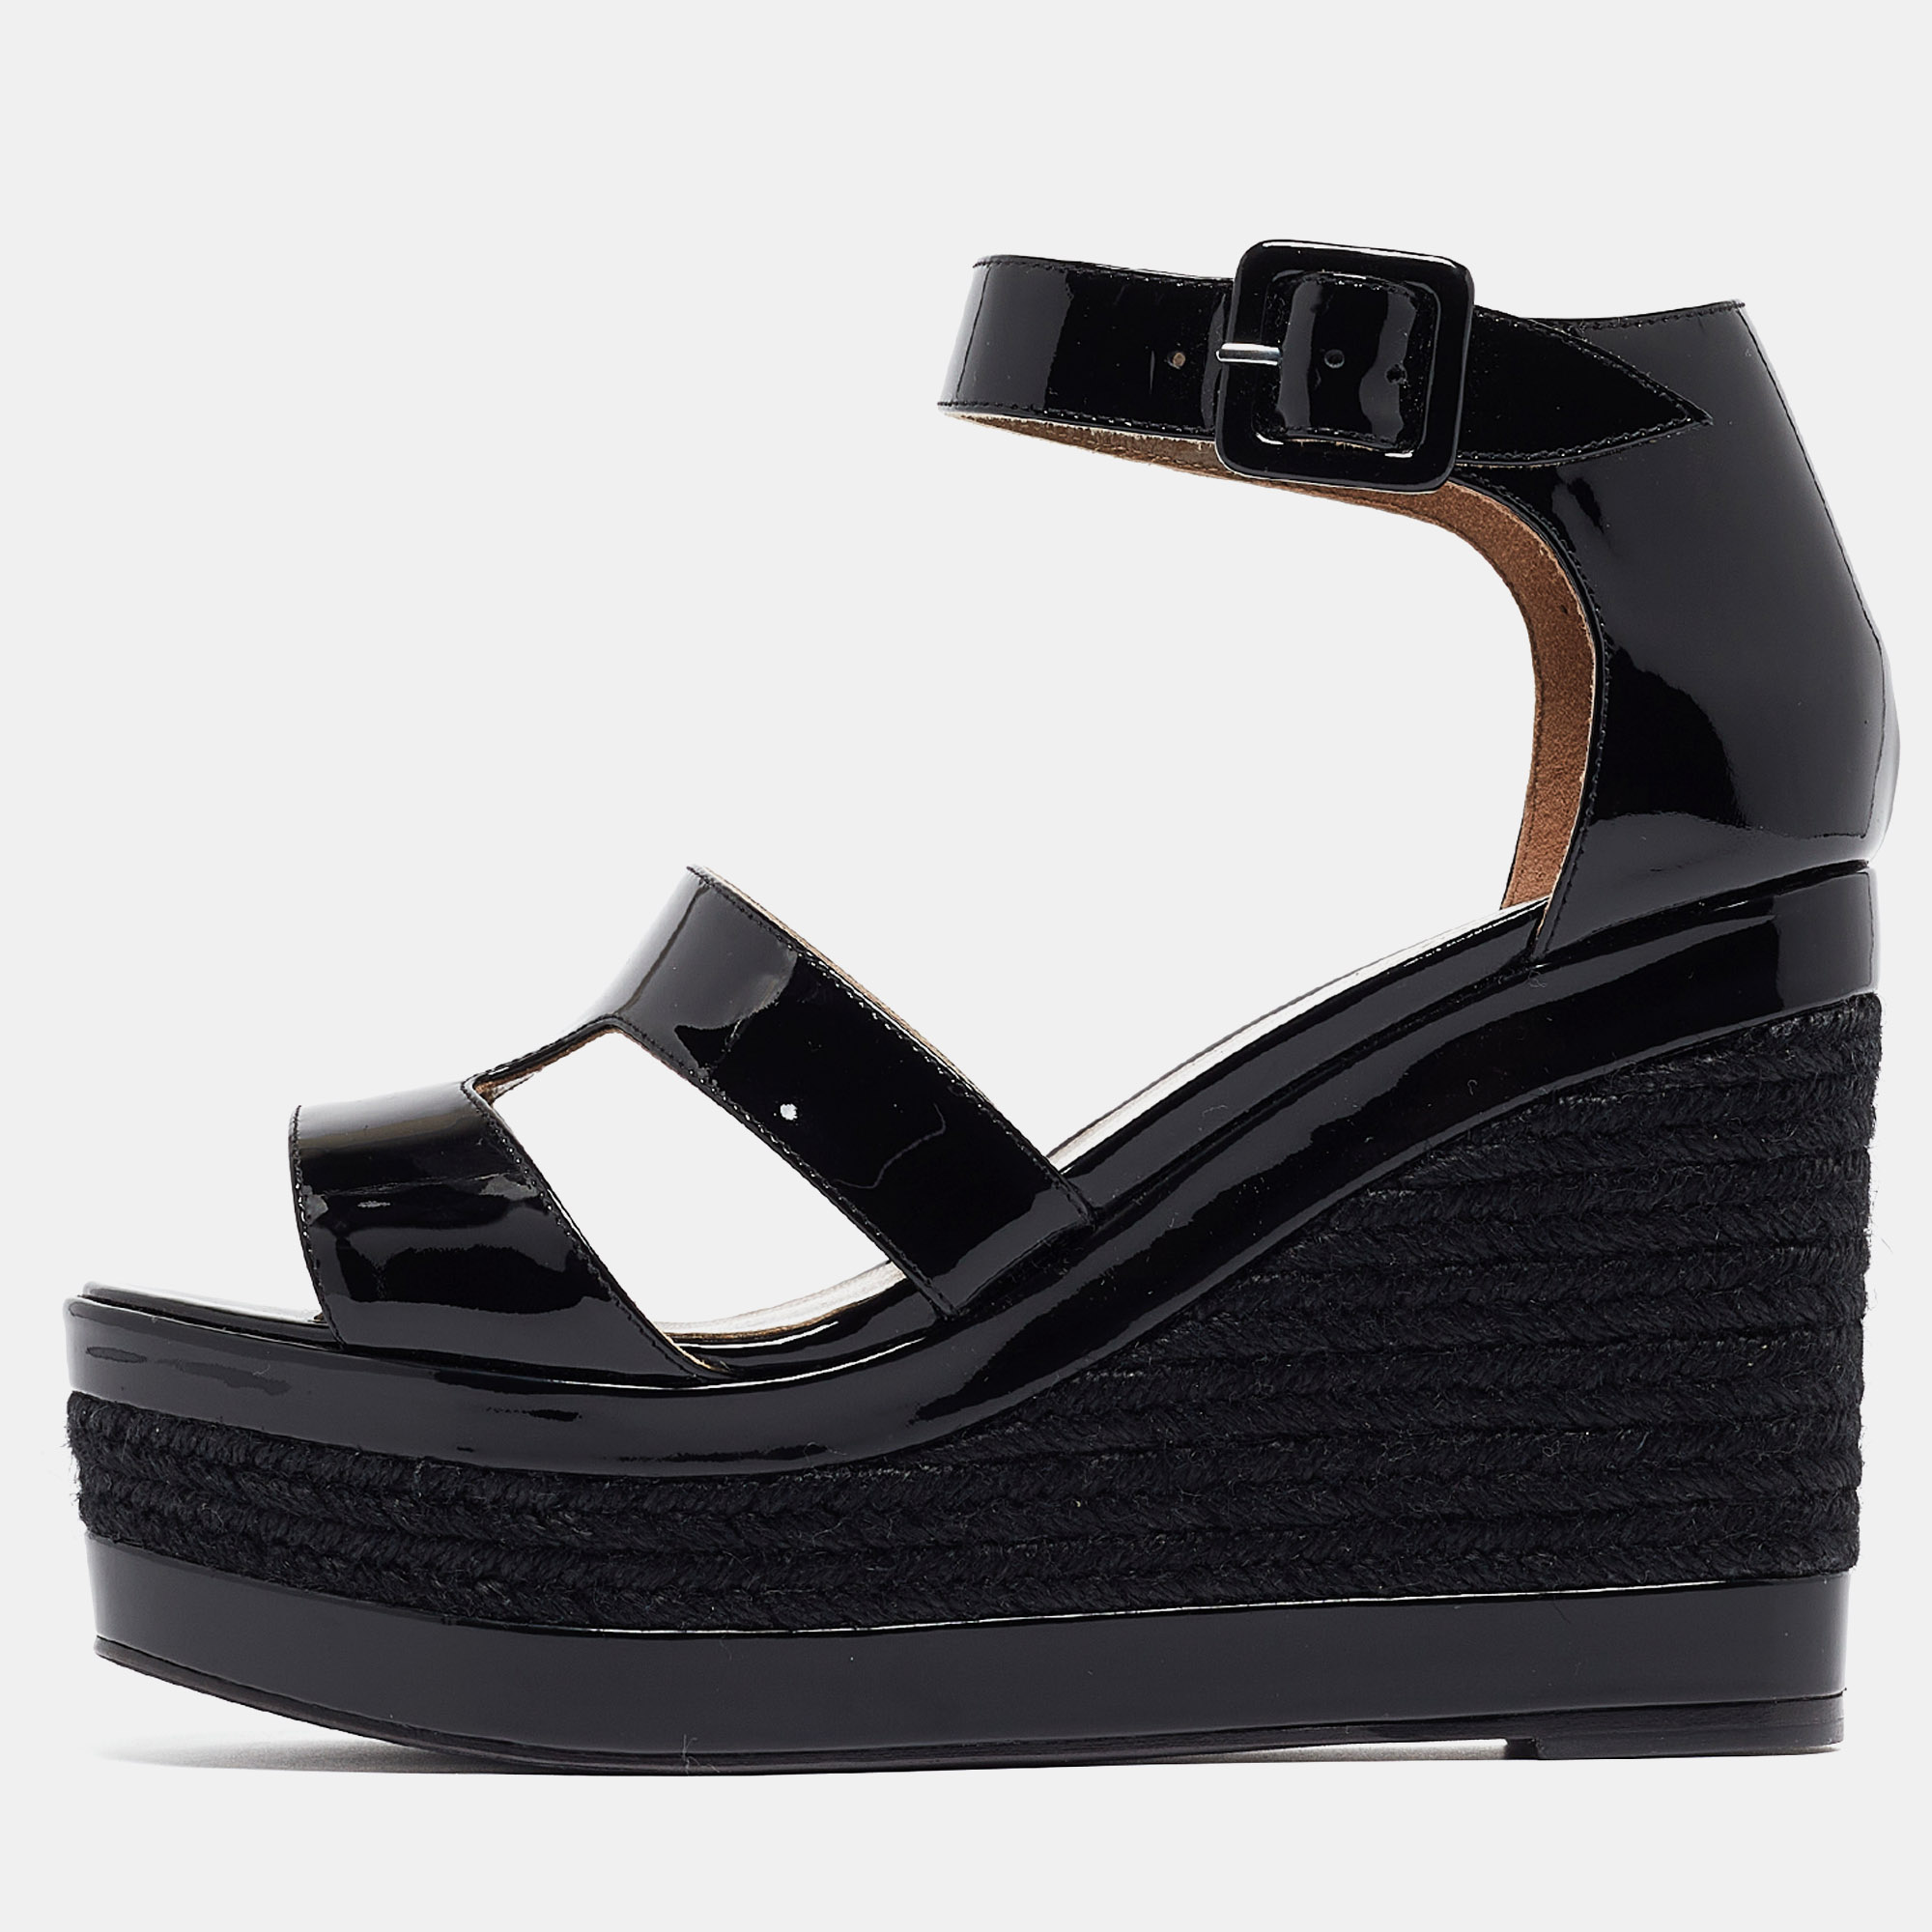 Hermes black patent leather ilana espadrille wedges sandals size 37